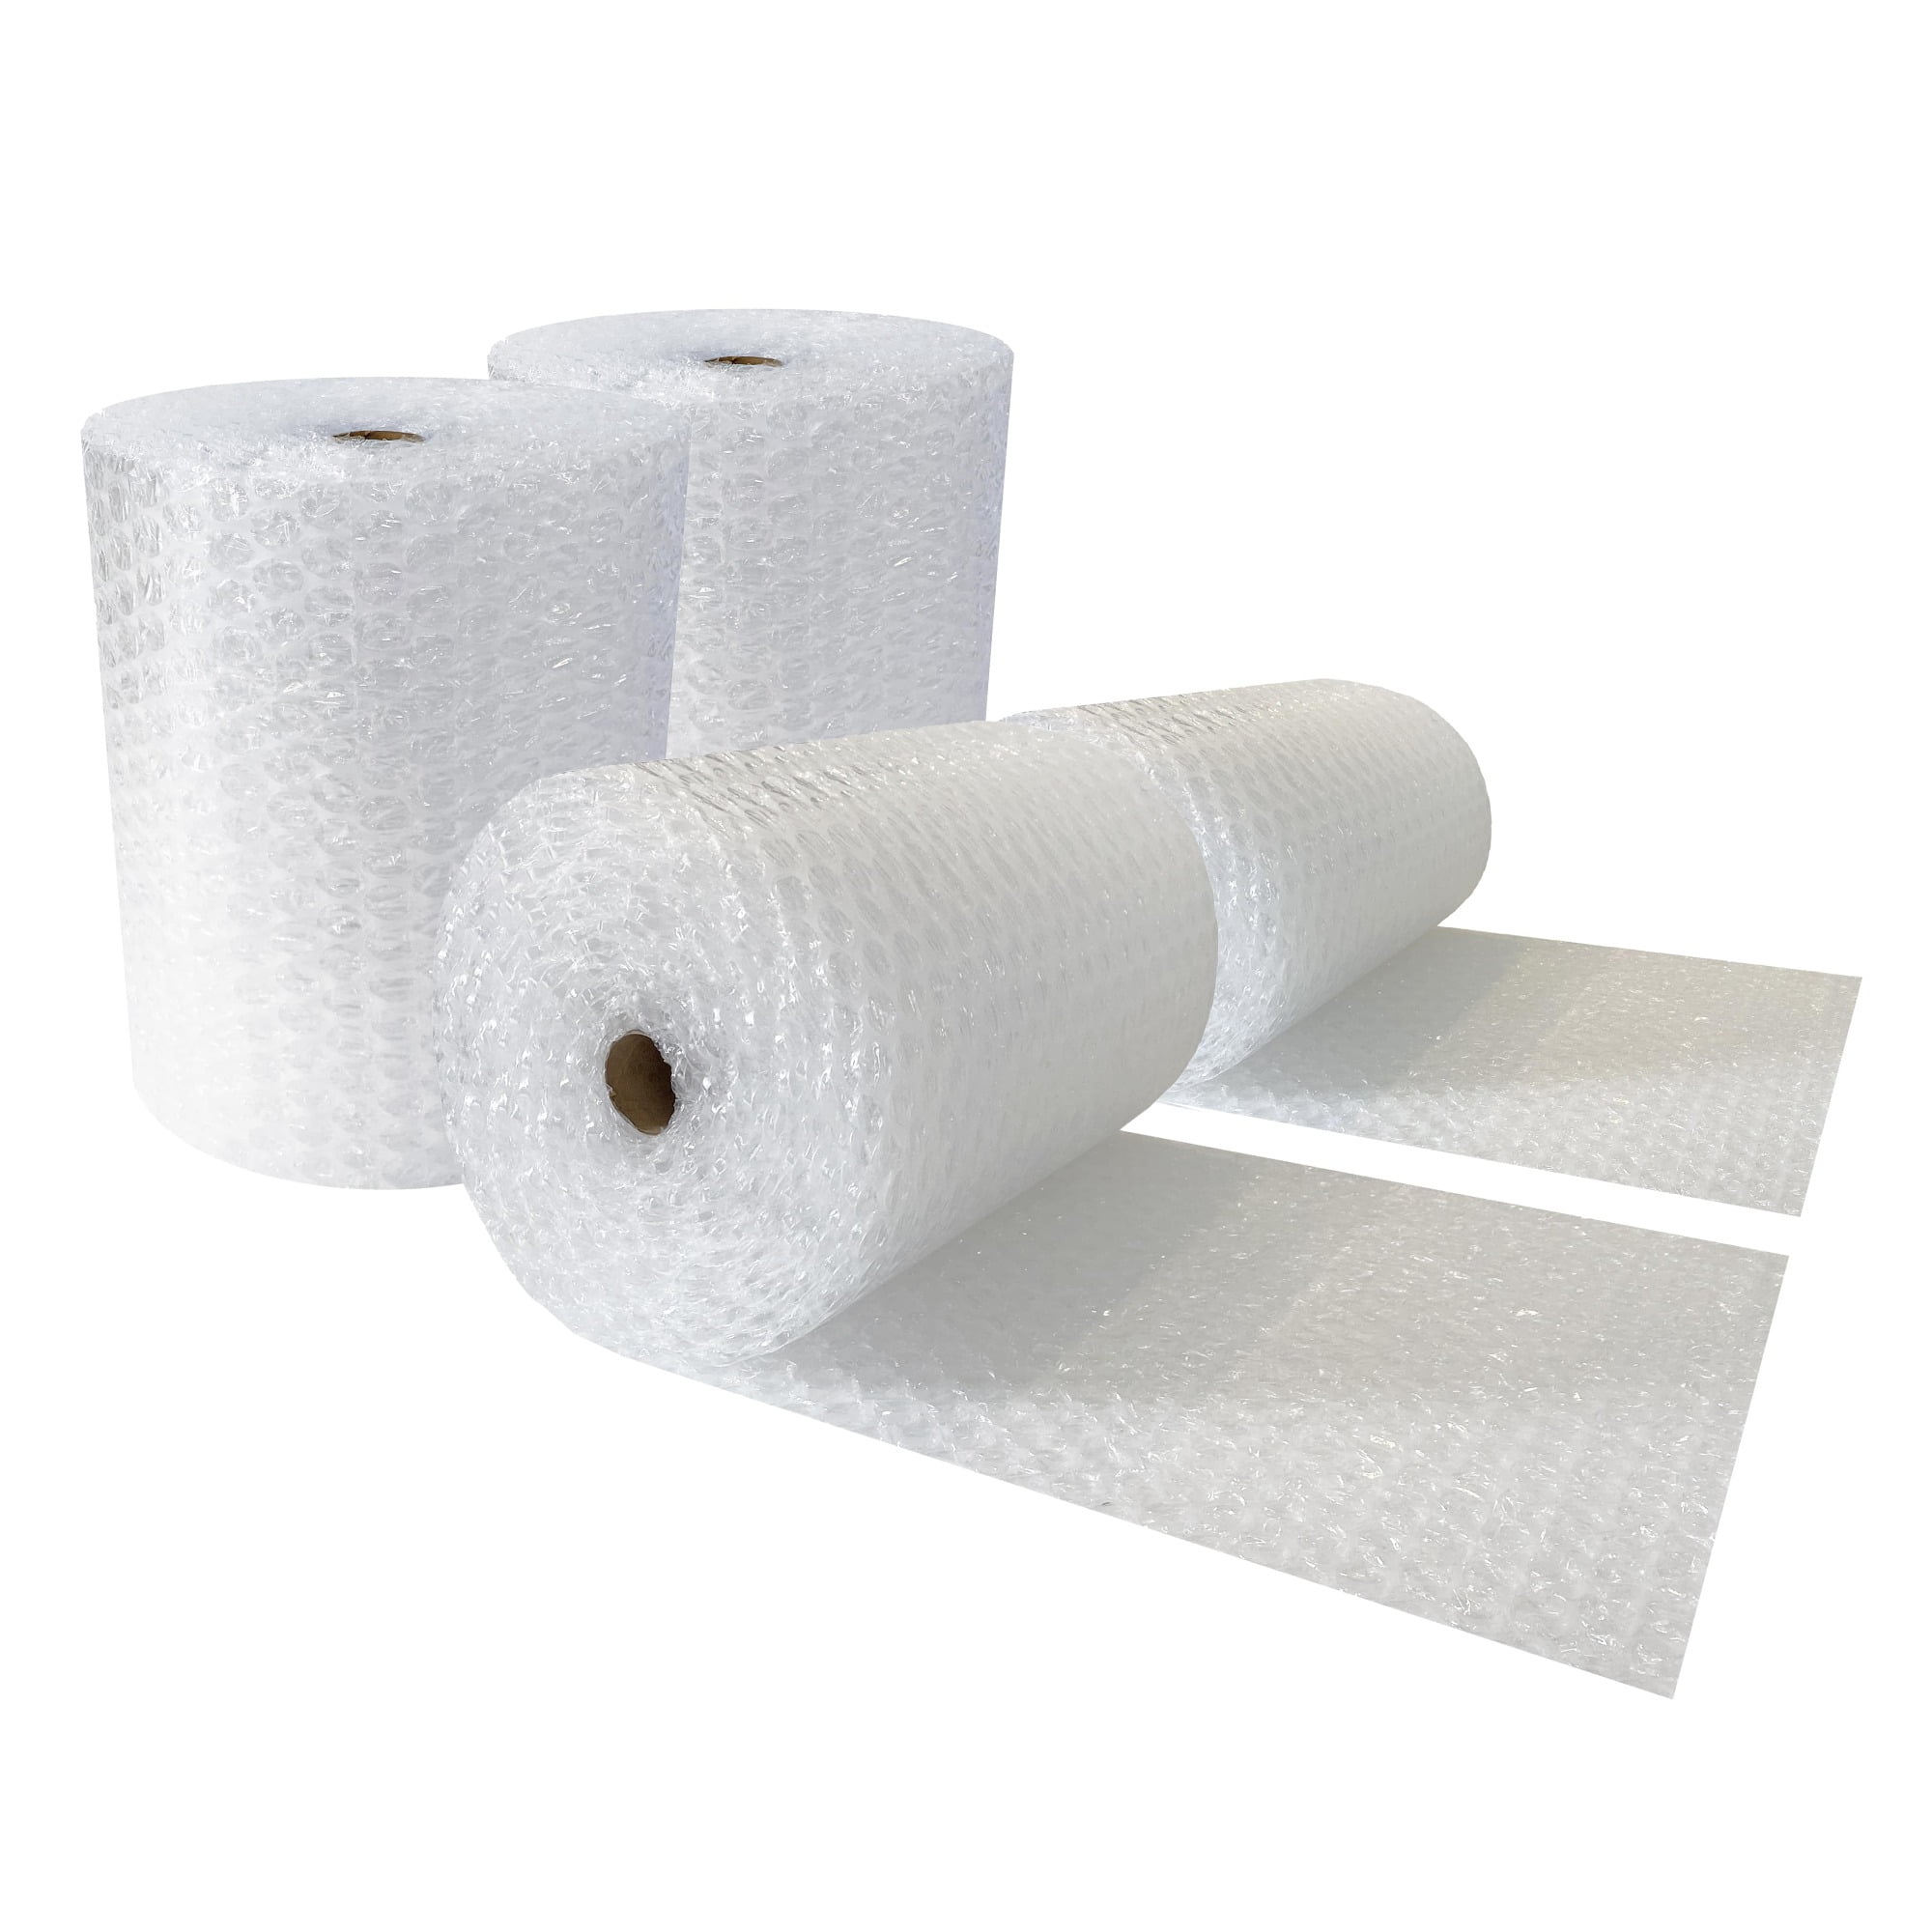 TOTALPACK® Air Cushioning Bubble Wrap Rolls - Packaging materials